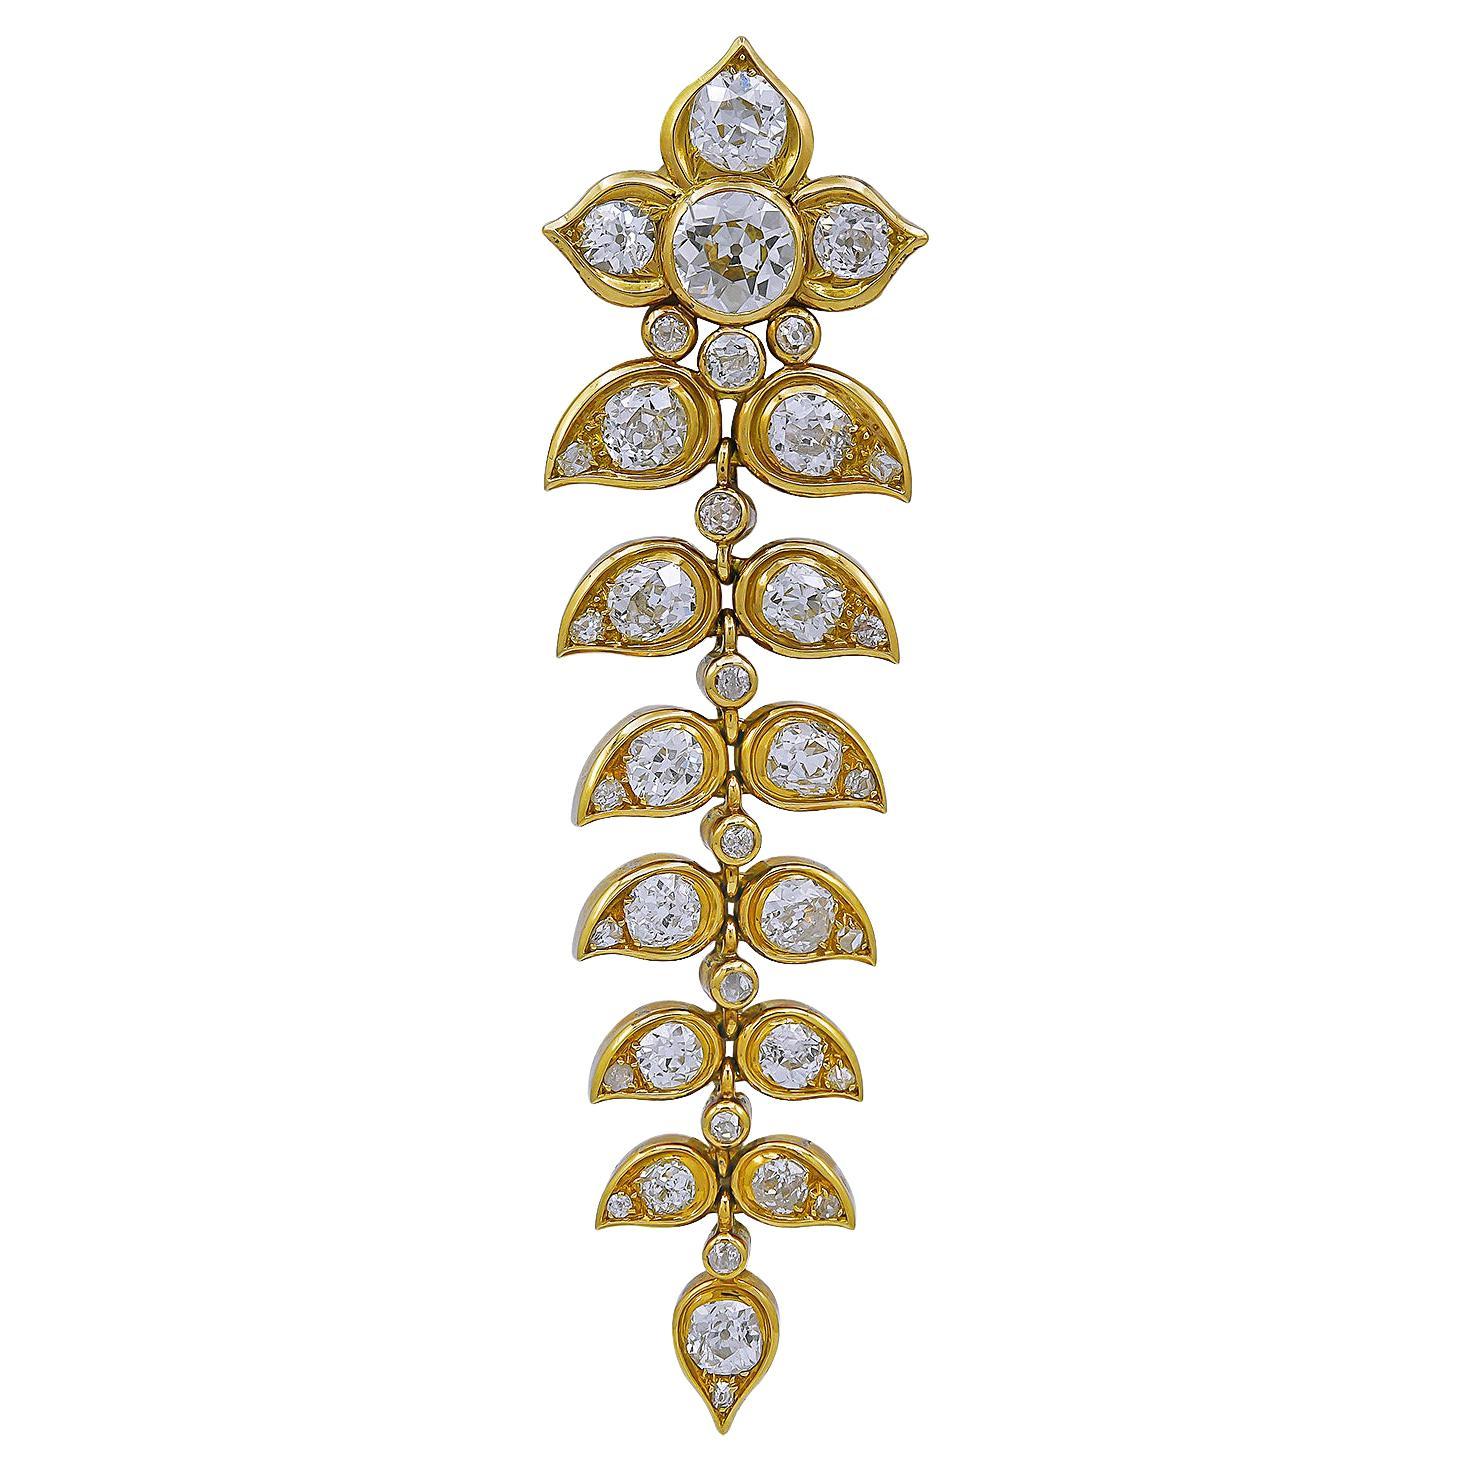 Boivin Retro-Blätterbrosche „Guirlande de Feuilles“ aus Gold mit Diamanten